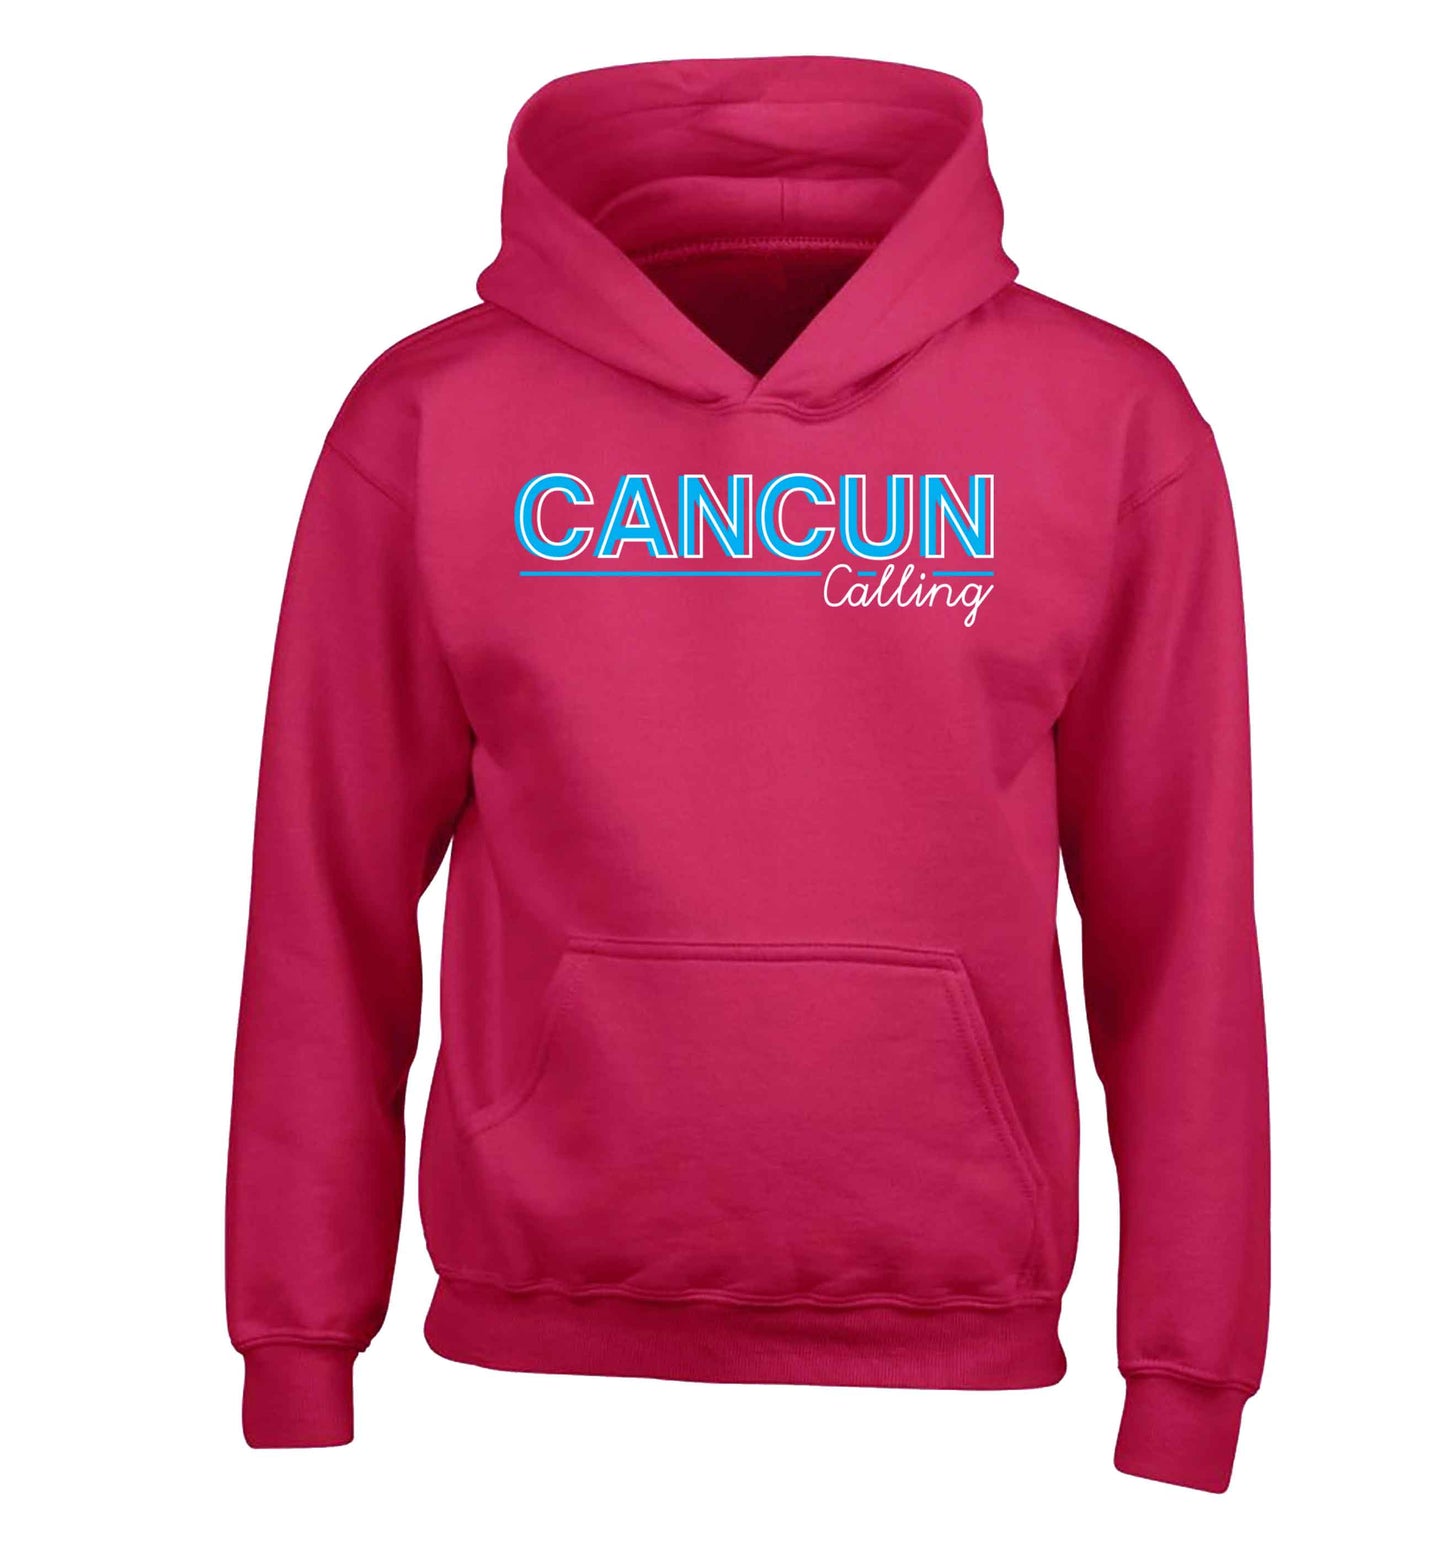 Cancun calling children's pink hoodie 12-13 Years